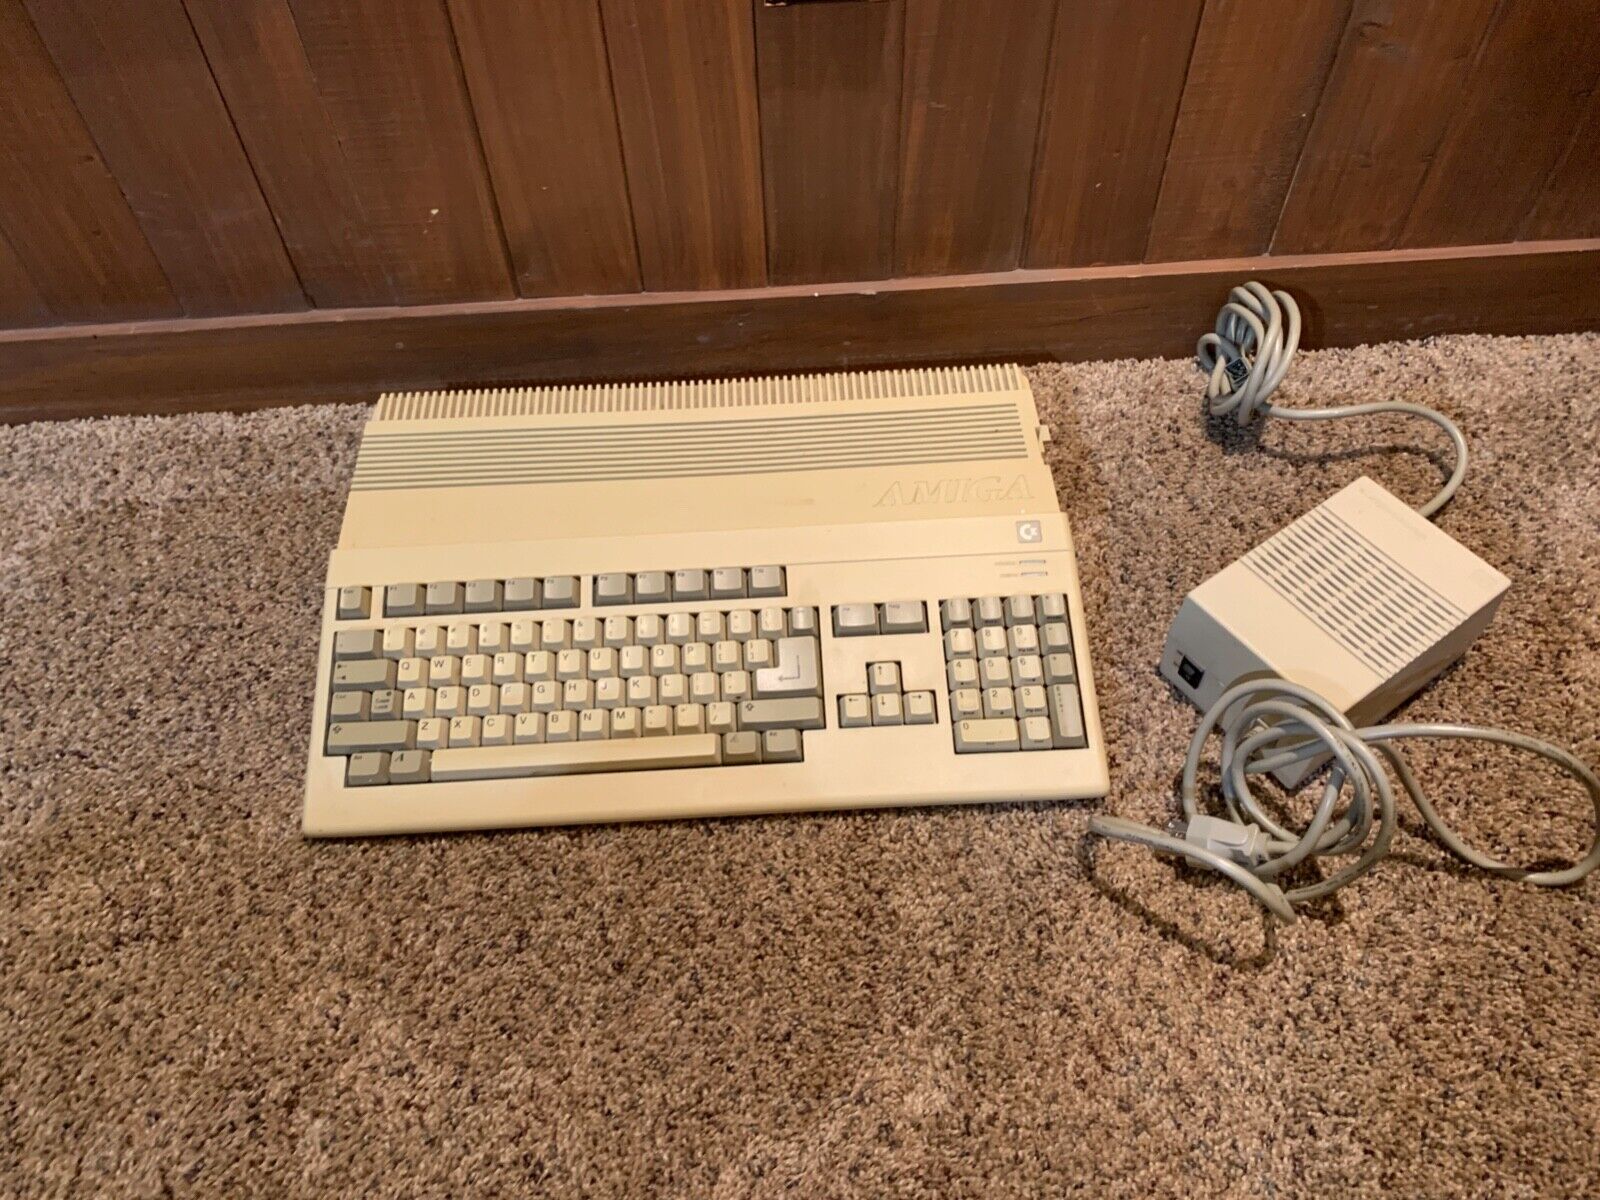 Amiga A500 Computer with power supply and original box